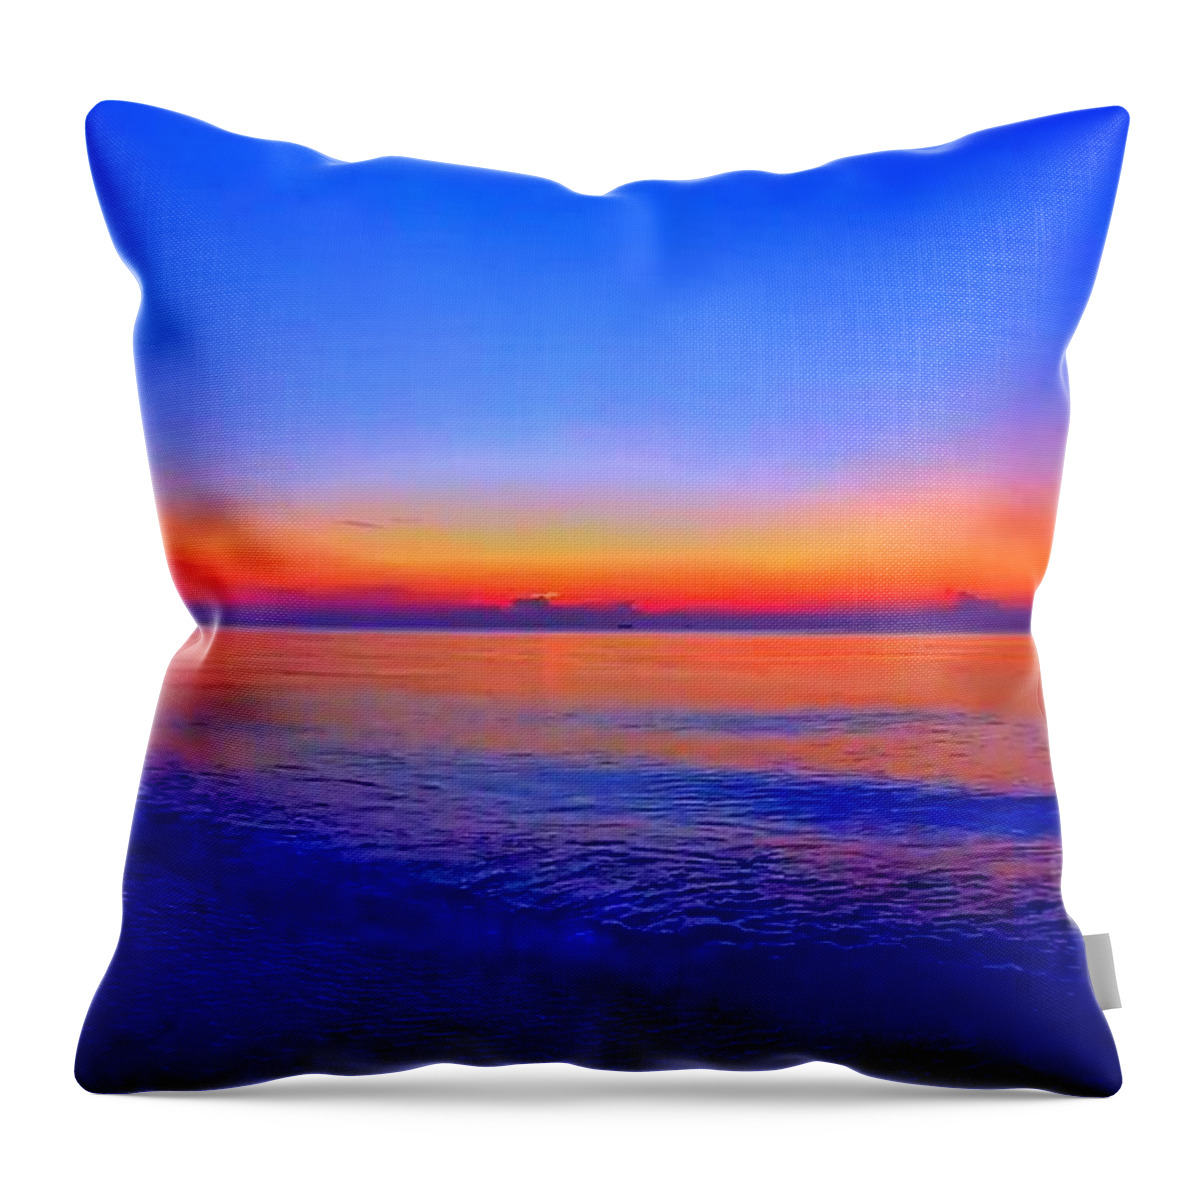 Sunrise Throw Pillow featuring the photograph Sunrise Beach 59 by Rip Read